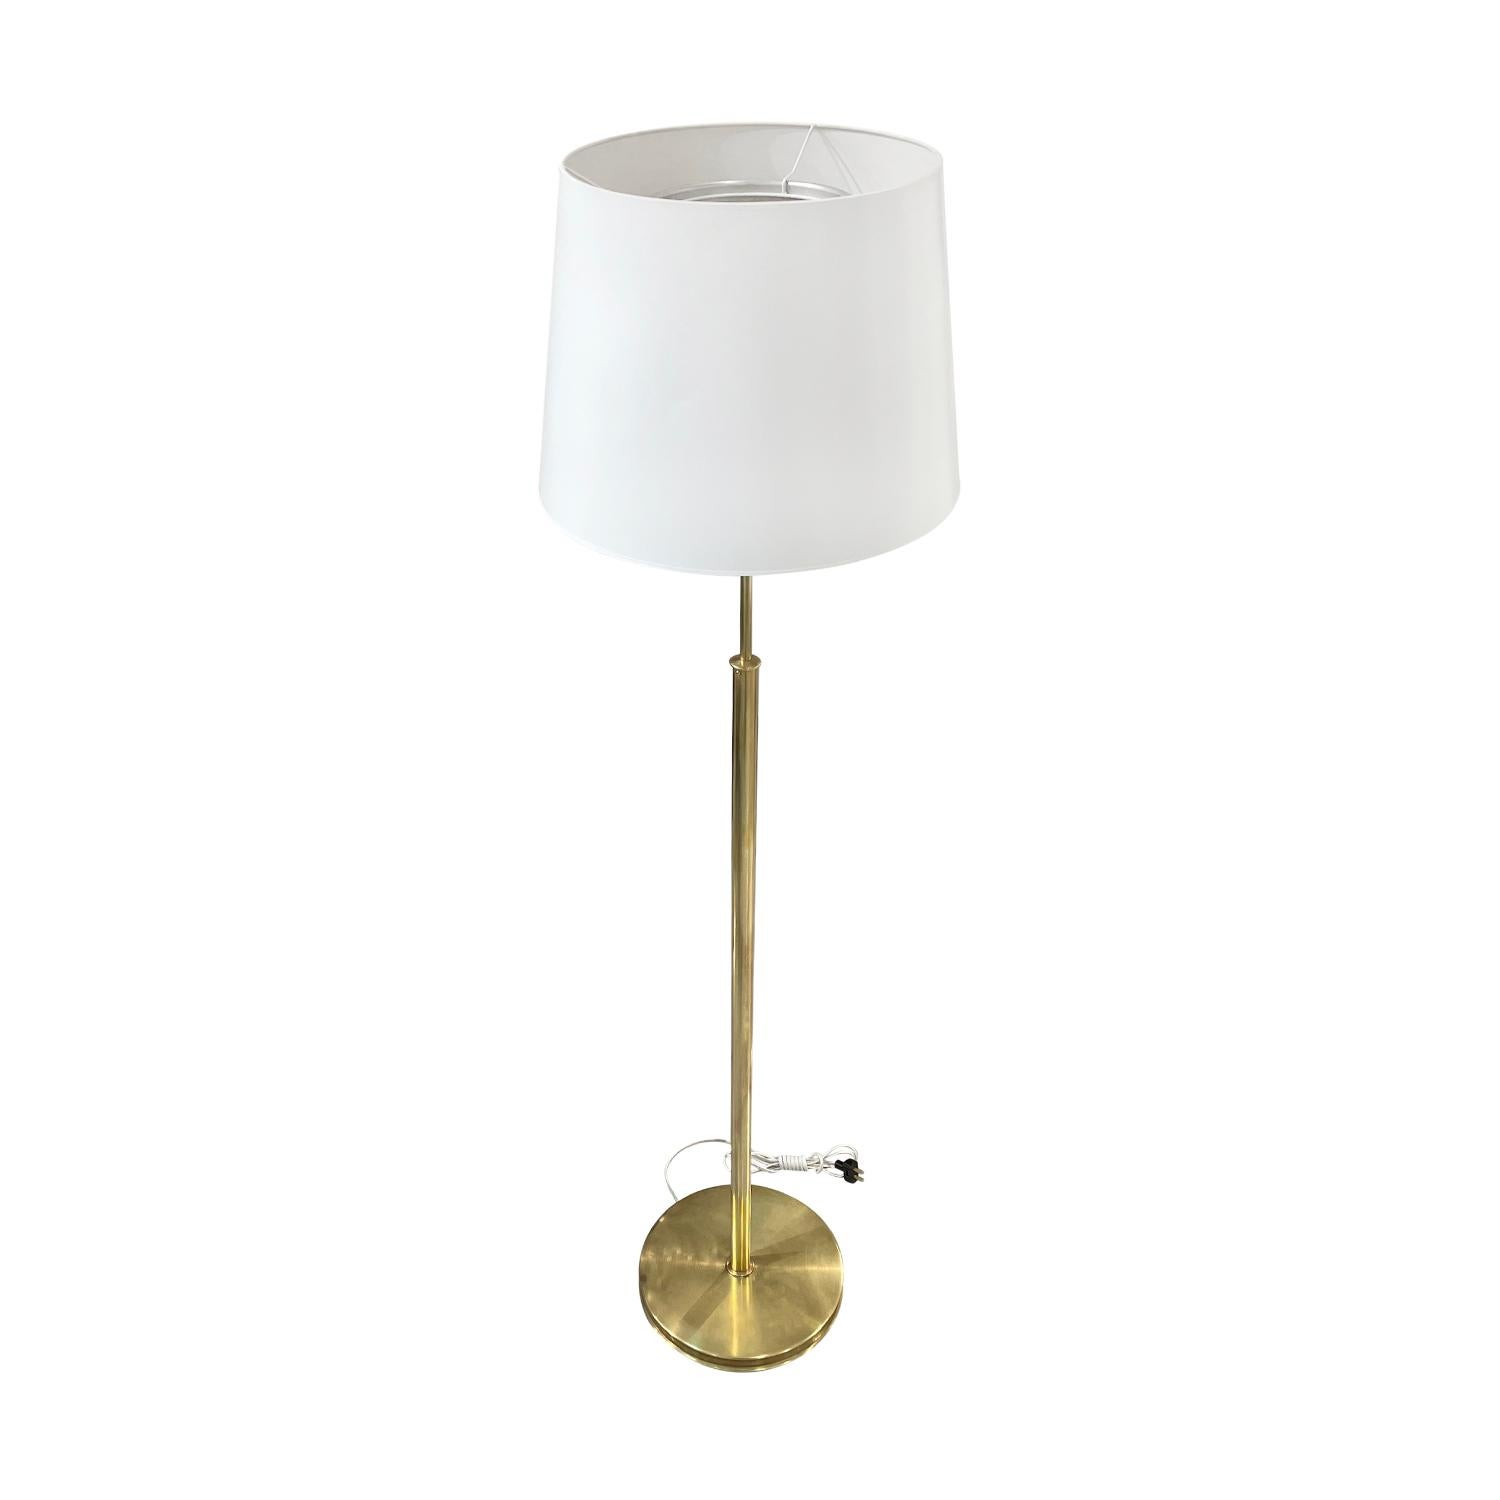 Hand-Crafted 20th Century Swedish Svenskt Tenn Brass Floor Lamp, Vintage Light by Josef Frank For Sale